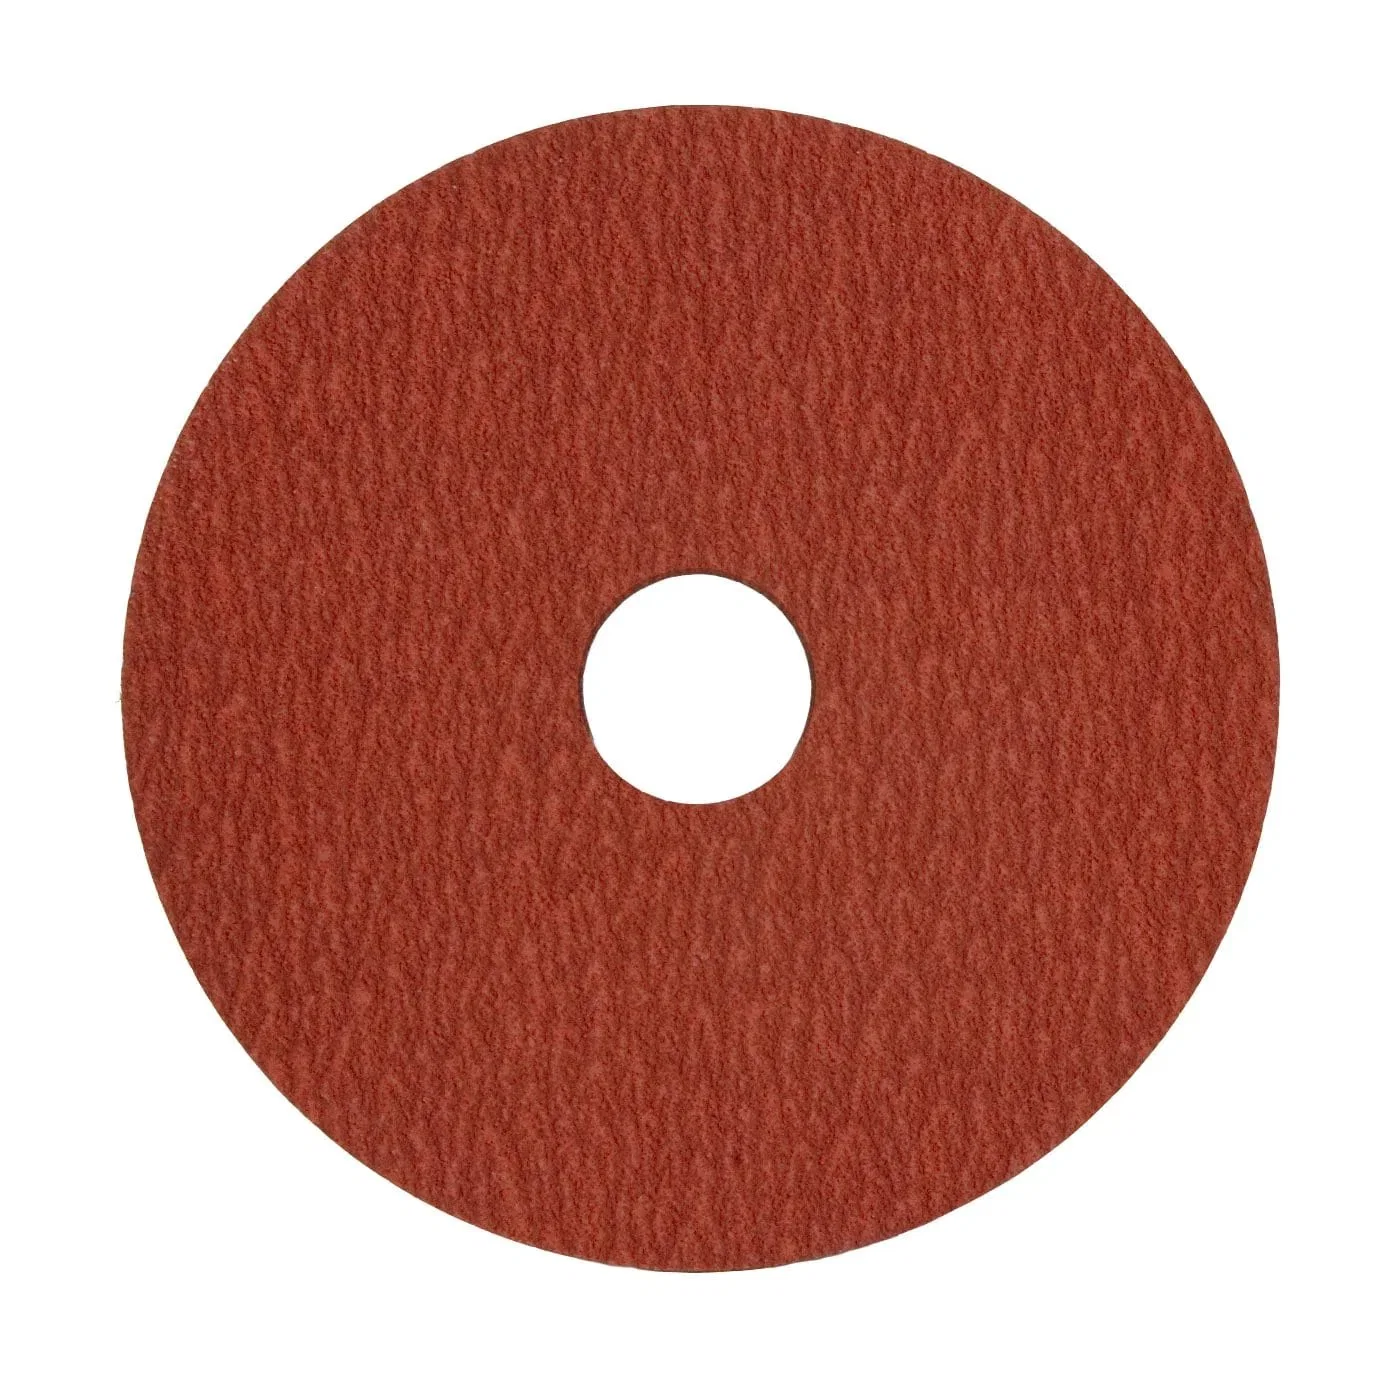 Ceramic Resin Fiber Disc Fibre Disc Grinding Disc for Stainless Steel 3m Raw Material #40